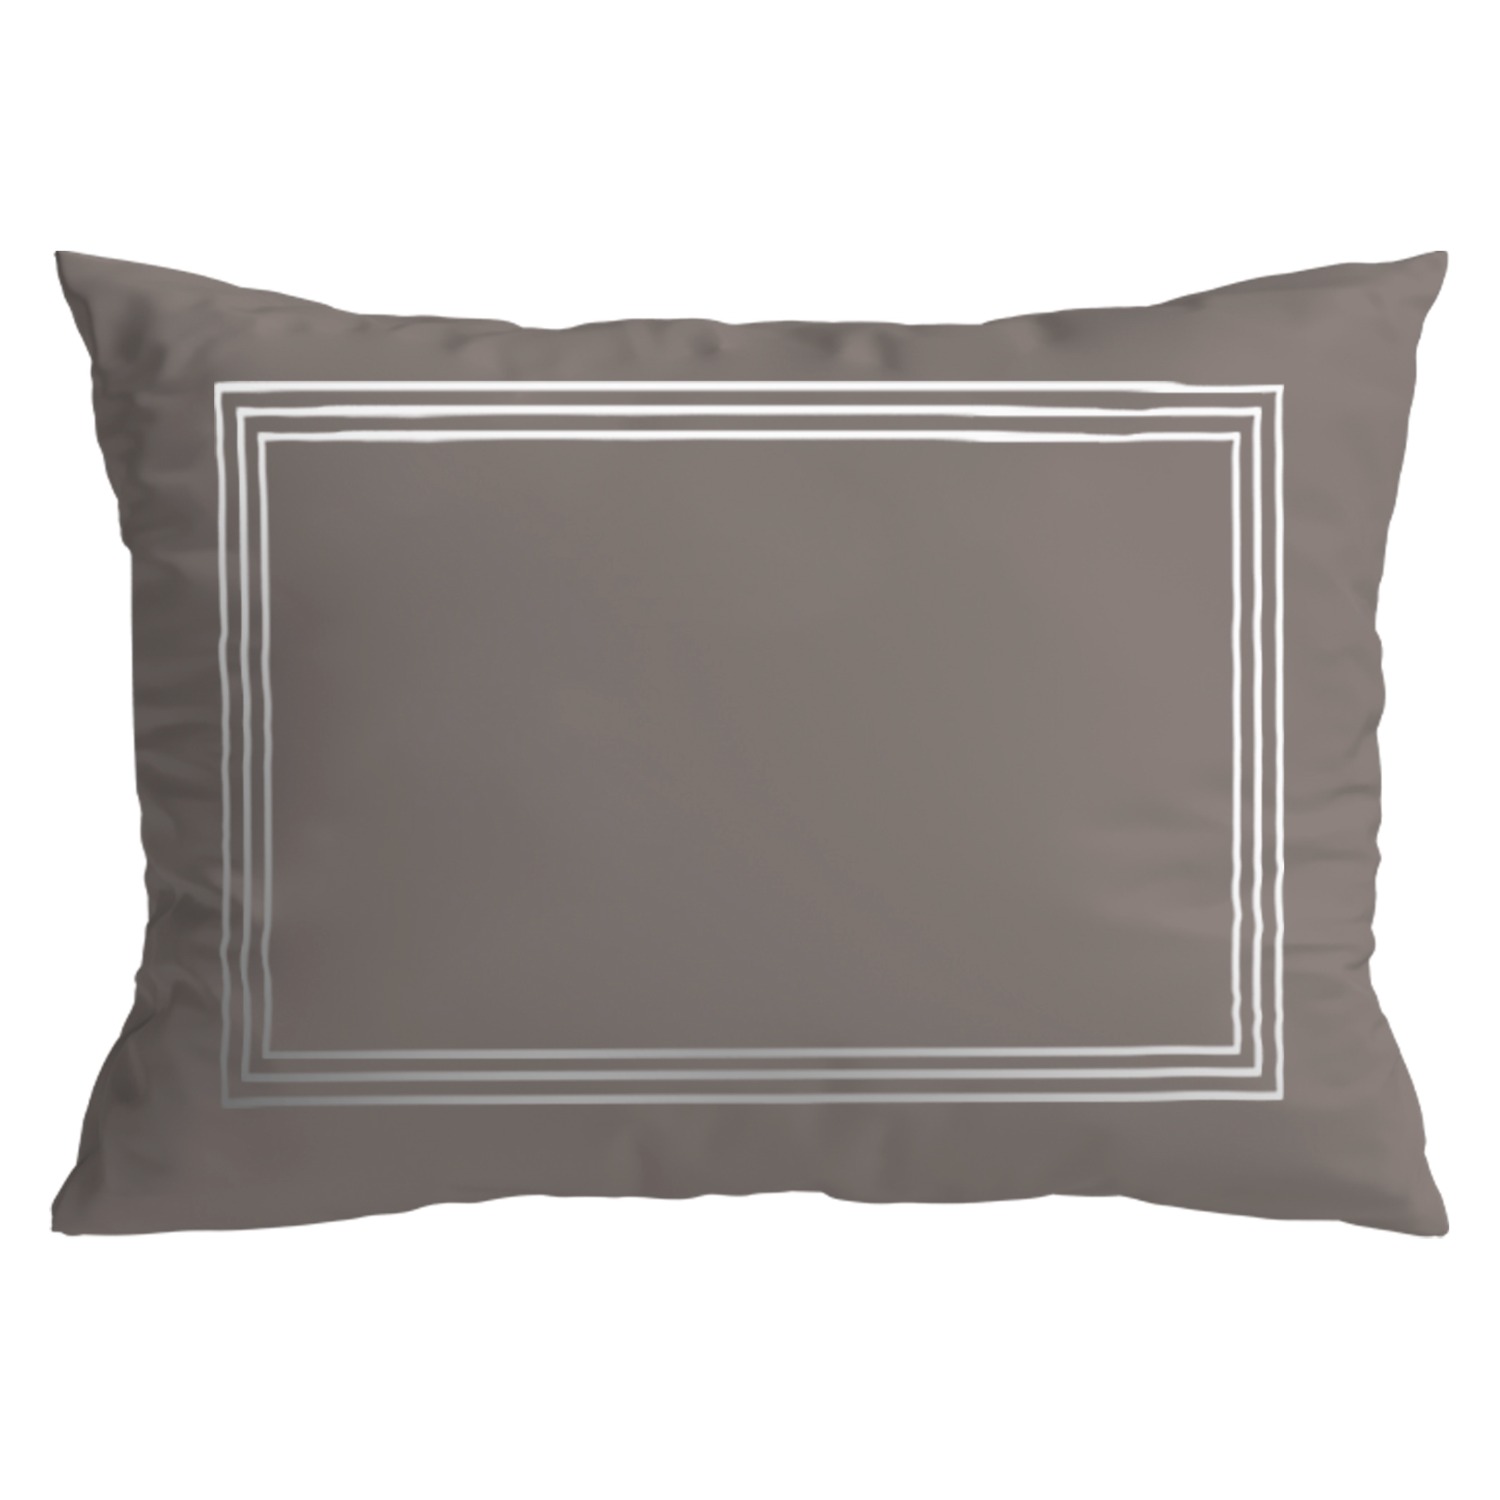 [maisone el BARA] Dear embroidery grey pillow cover